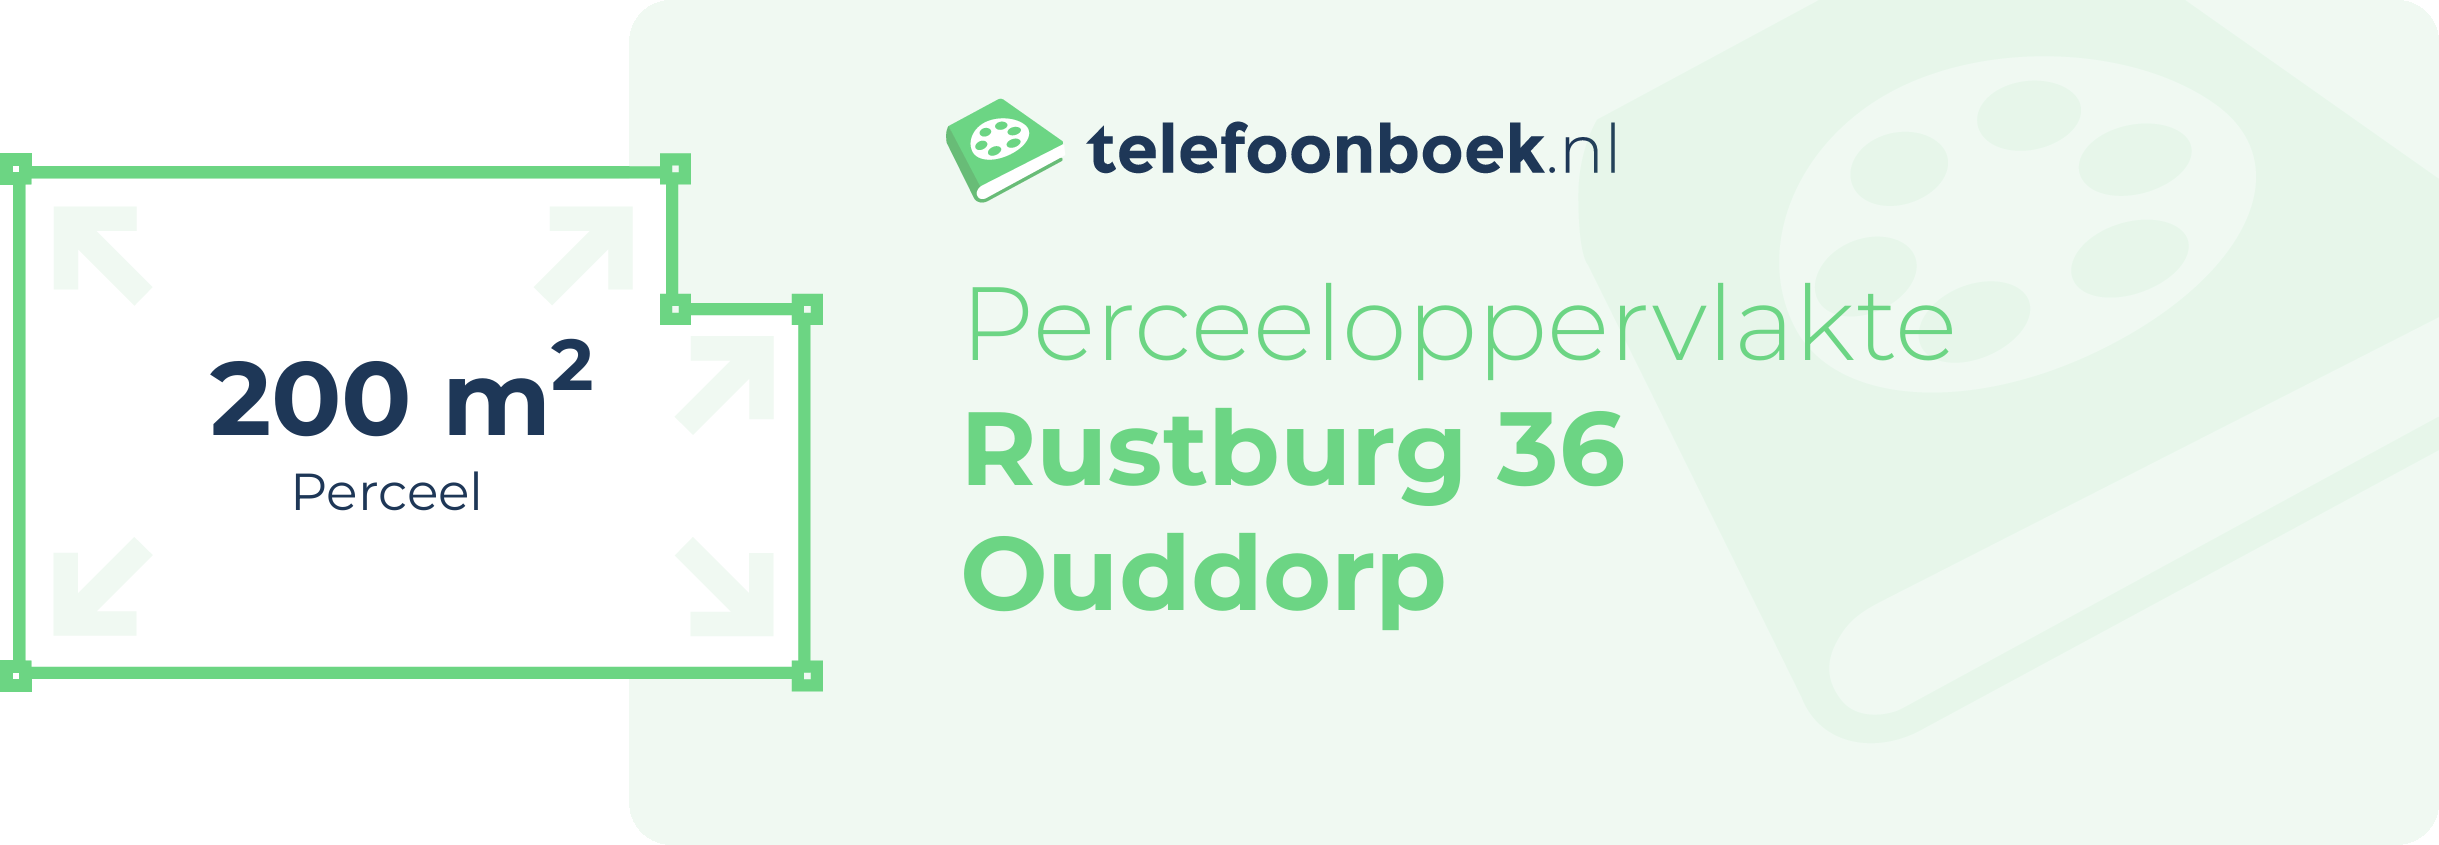 Perceeloppervlakte Rustburg 36 Ouddorp